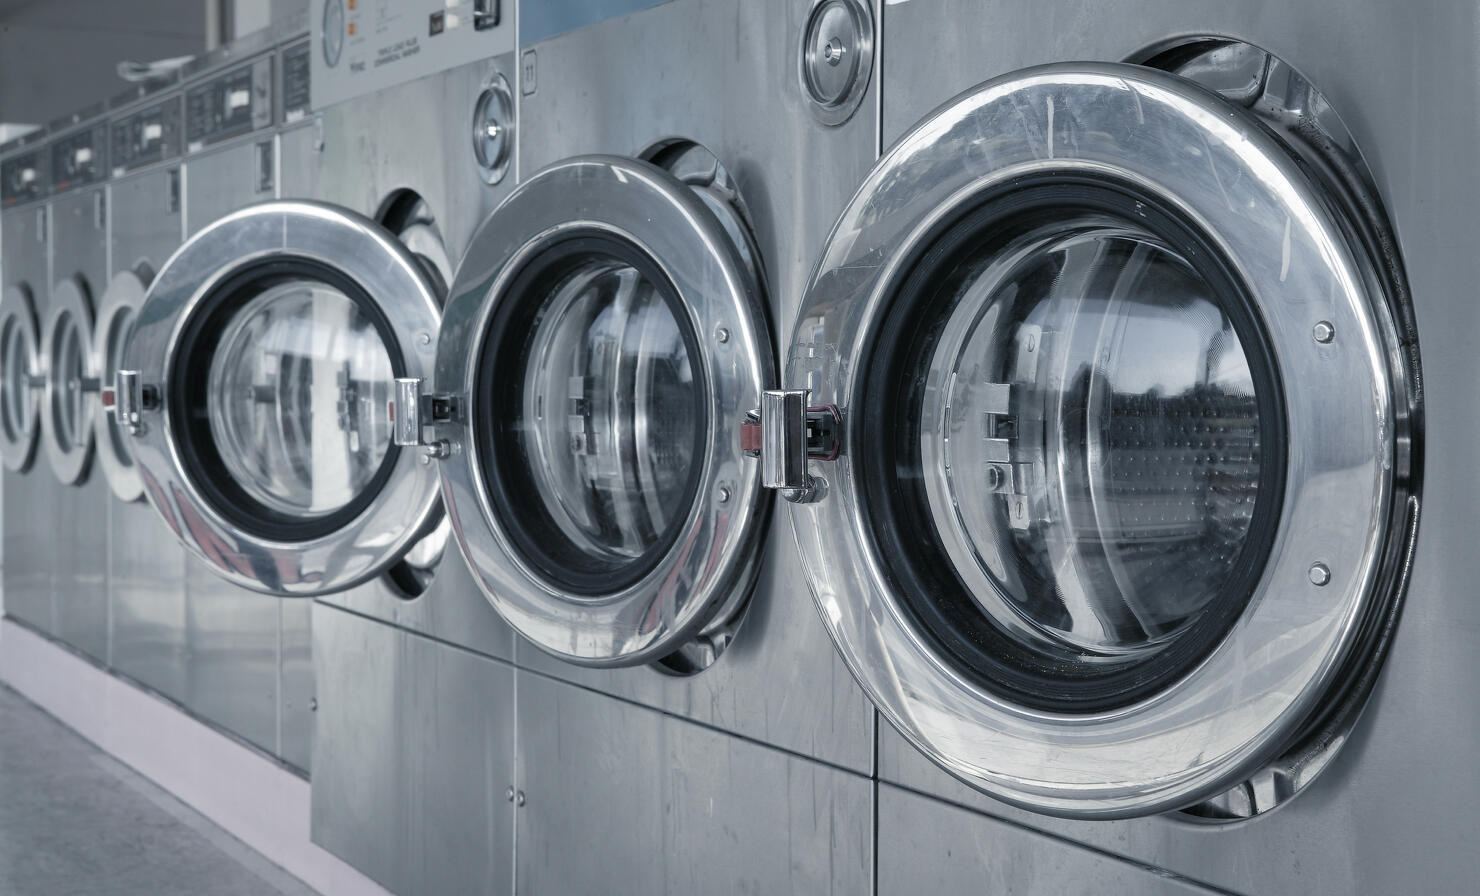 Washing Machines in Laundromat